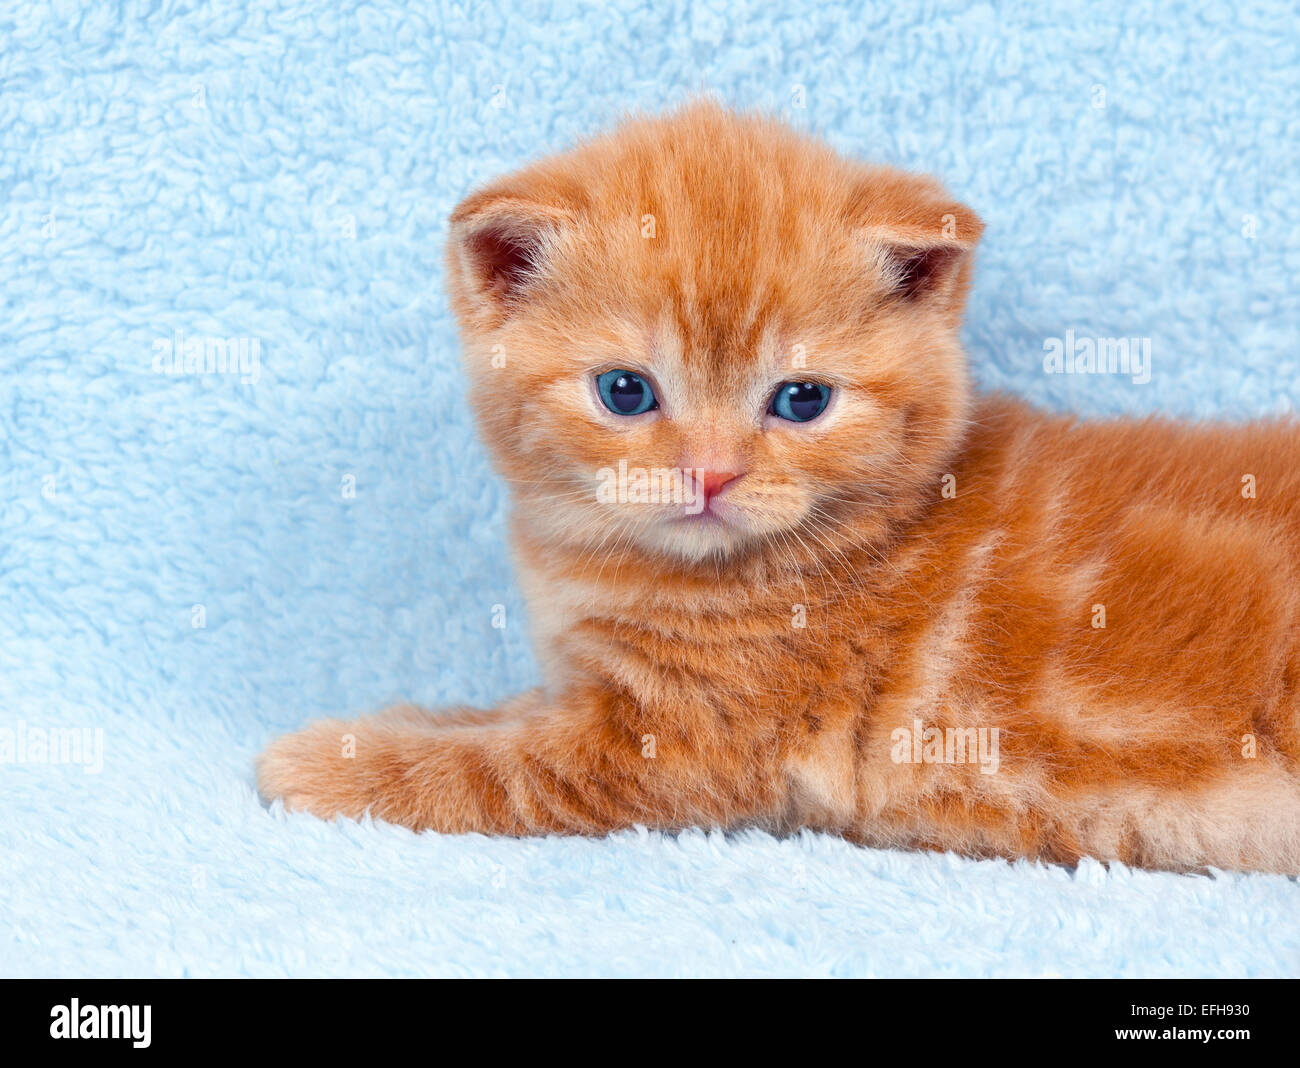 Cute little kitten on blue blanket Stock Photo